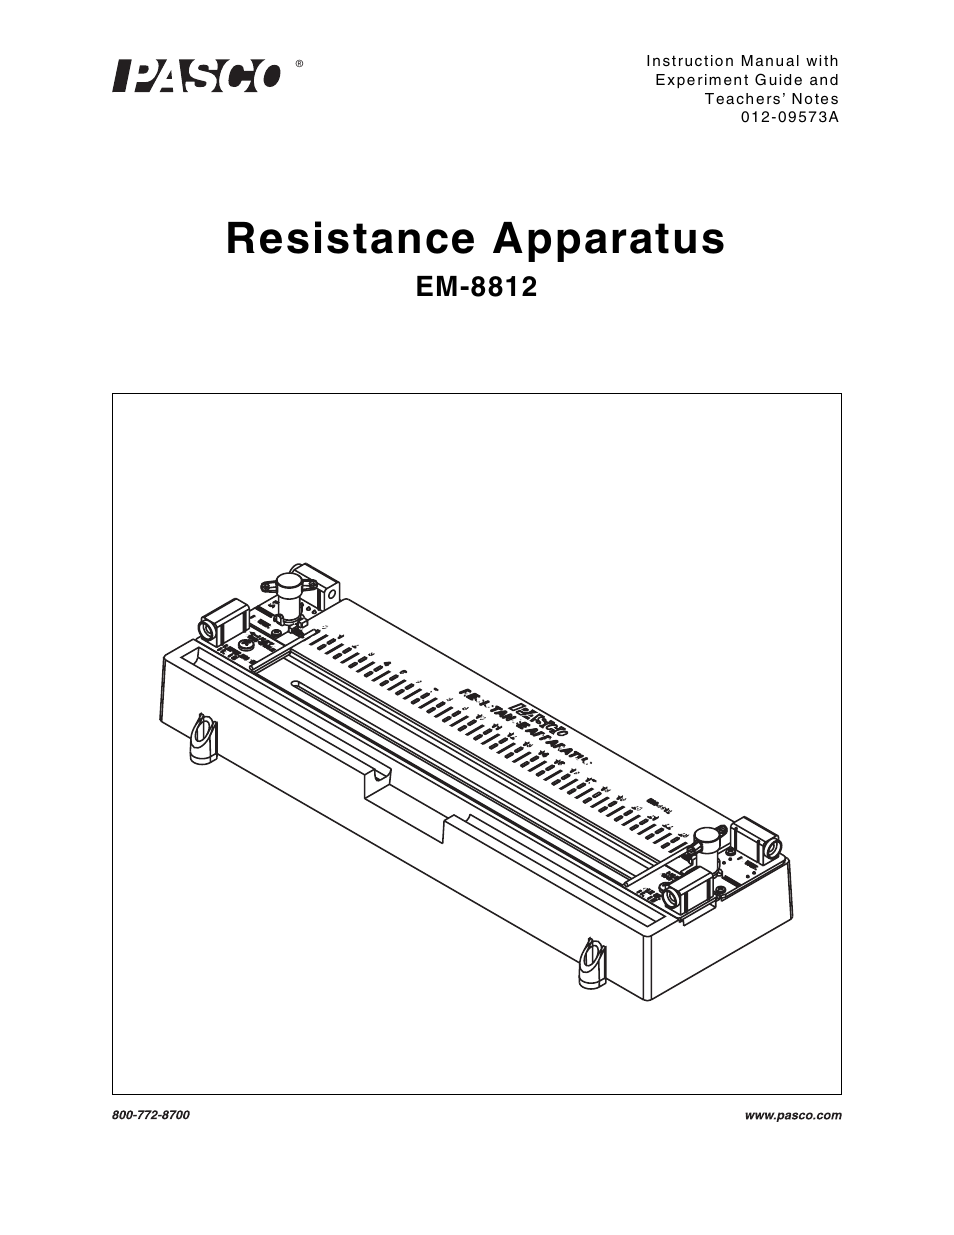 PASCO EM-8812 Resistance Apparatus User Manual | 18 pages